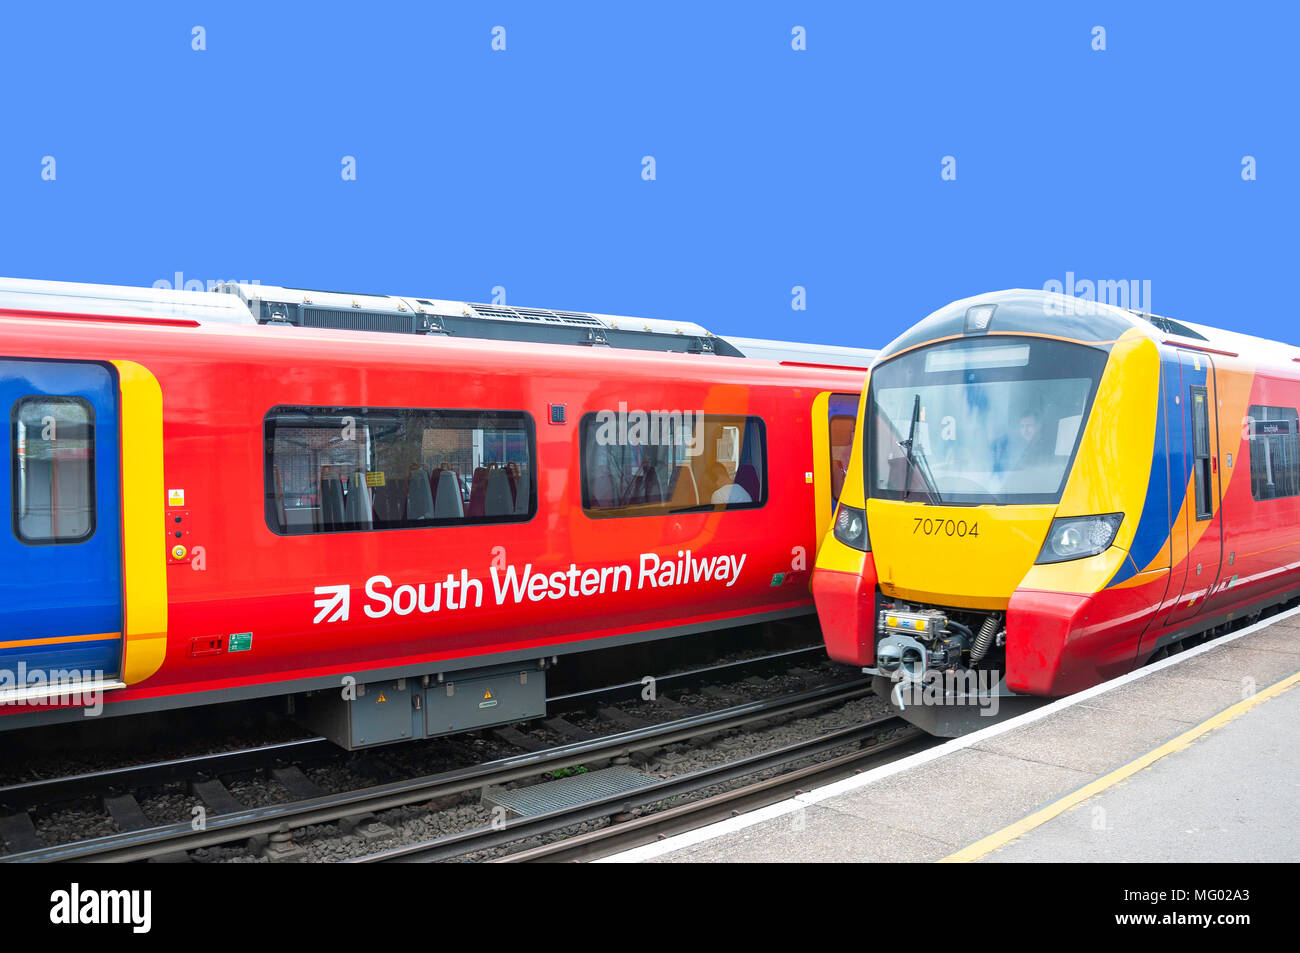 South Western Railway train à la gare d'Ashford, Ashford, Surrey, Angleterre, Royaume-Uni Banque D'Images